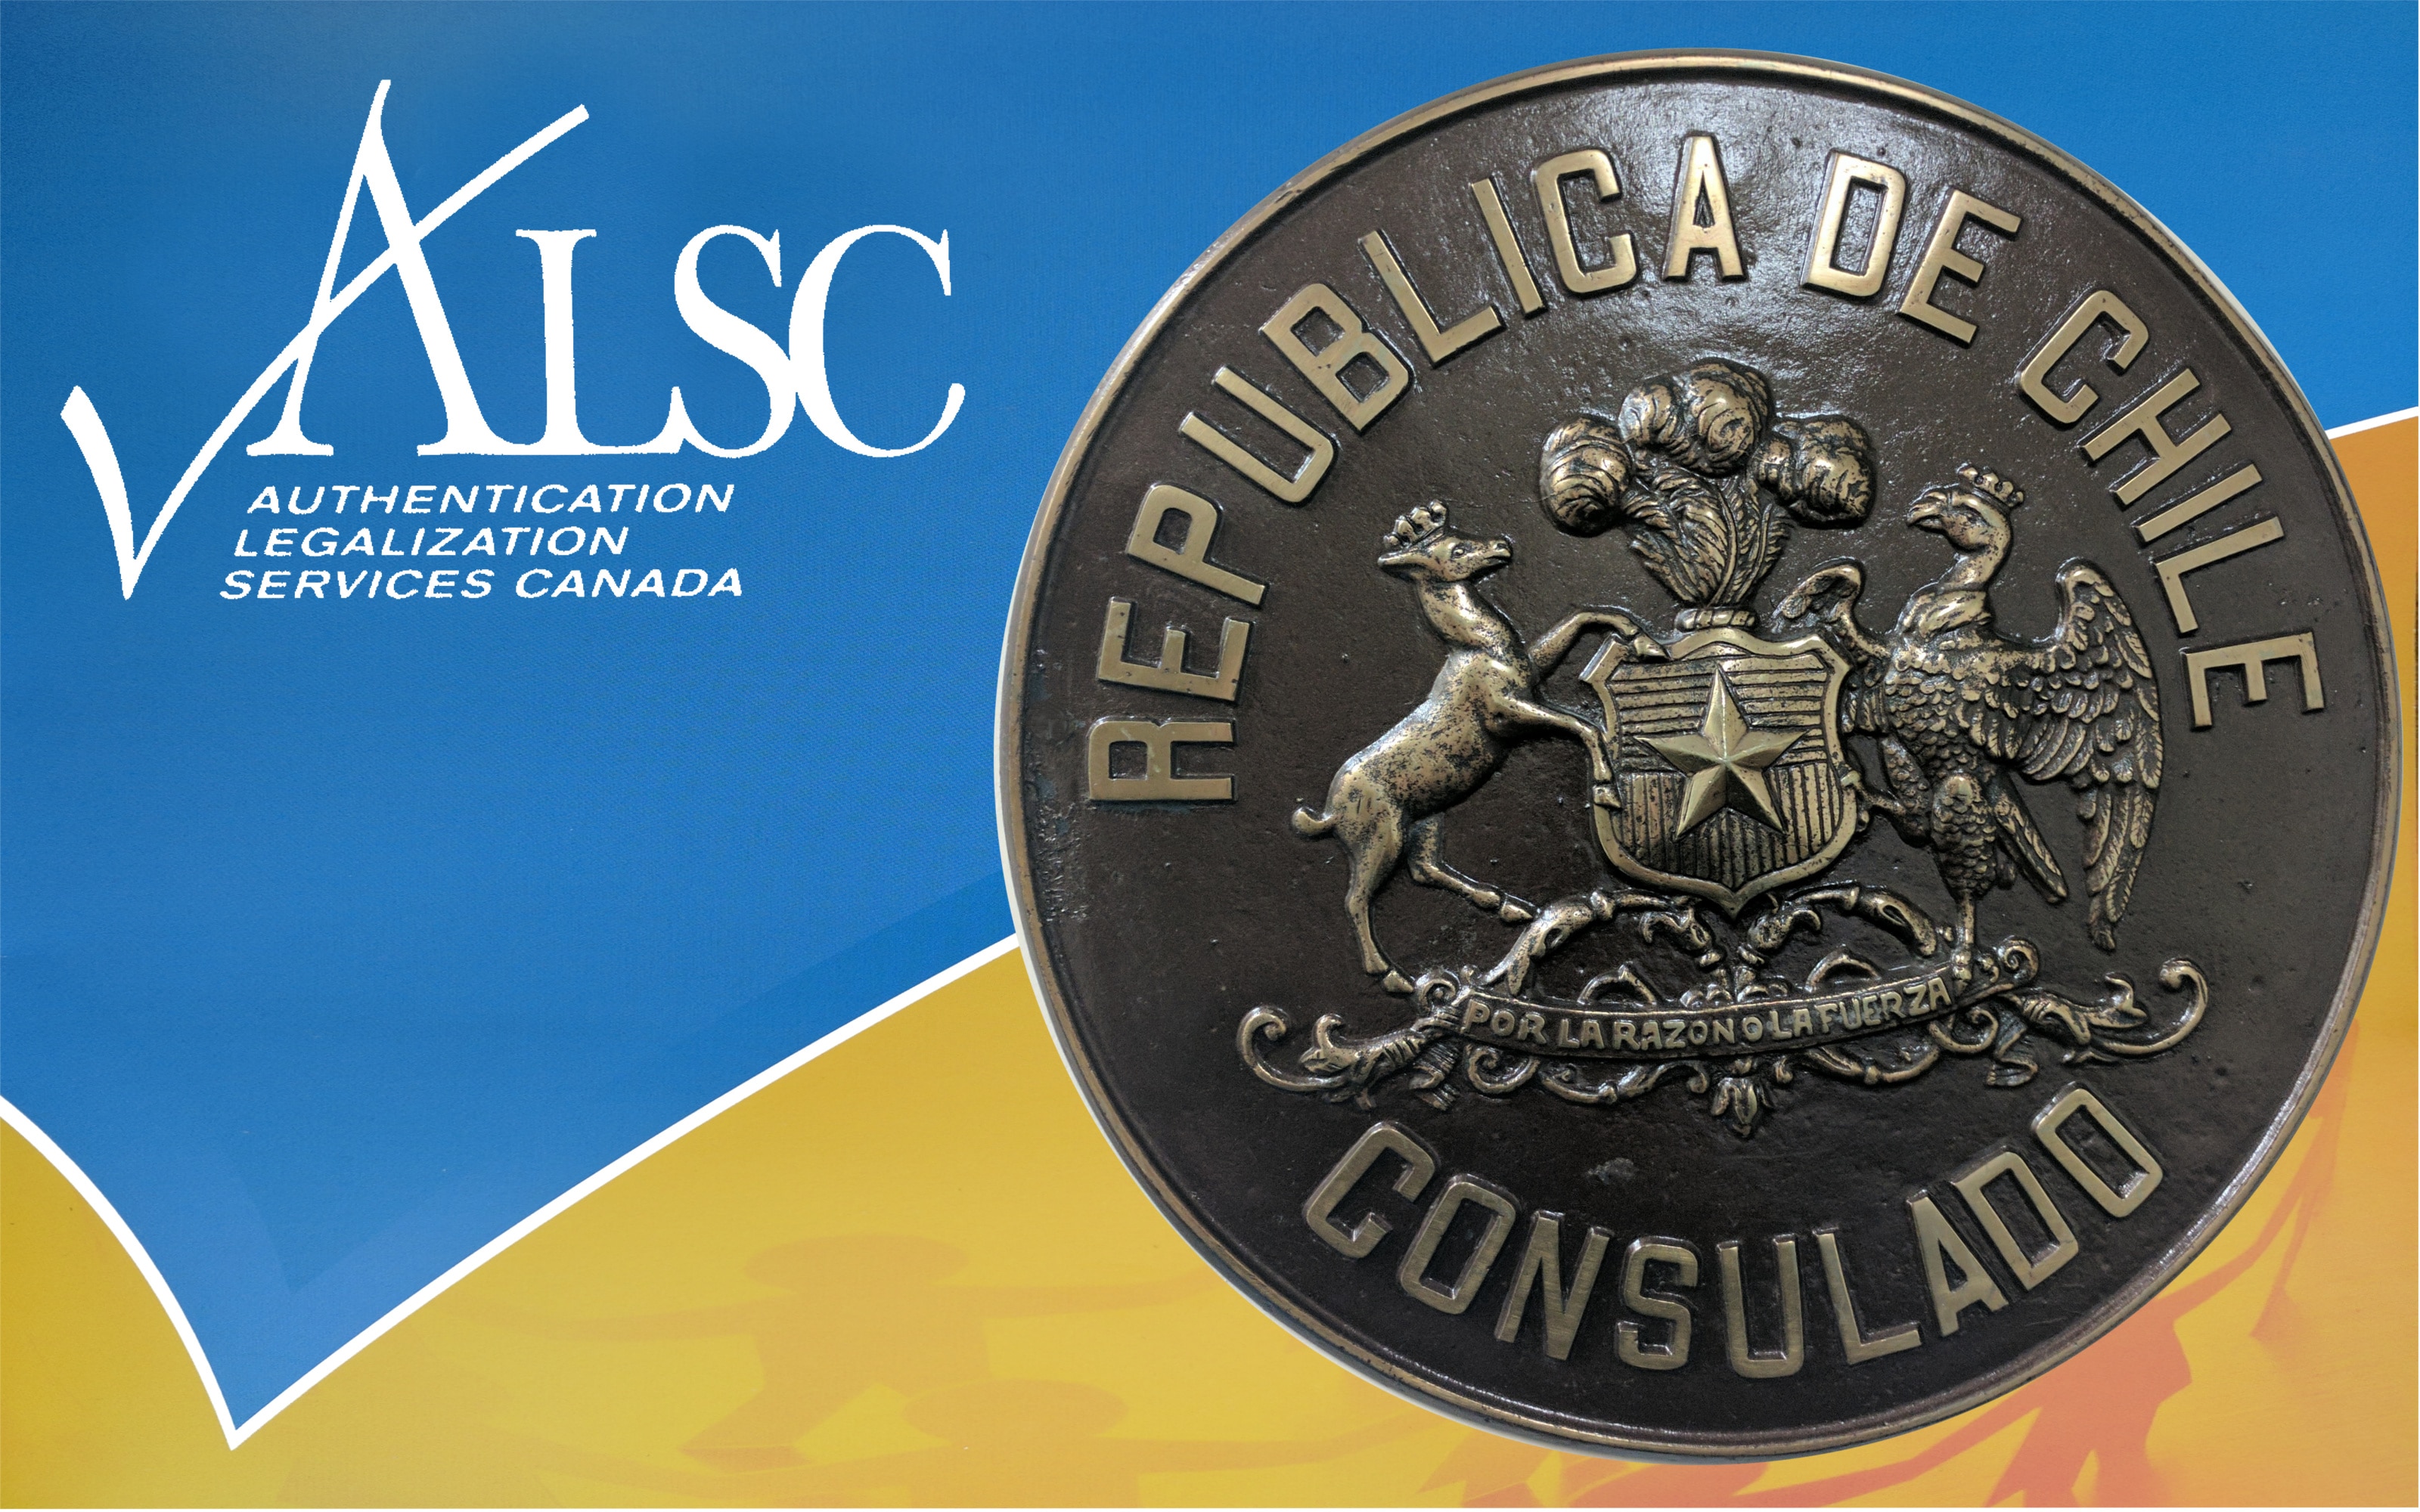 Chile Canada Apostille, Authentication, Legalization Services